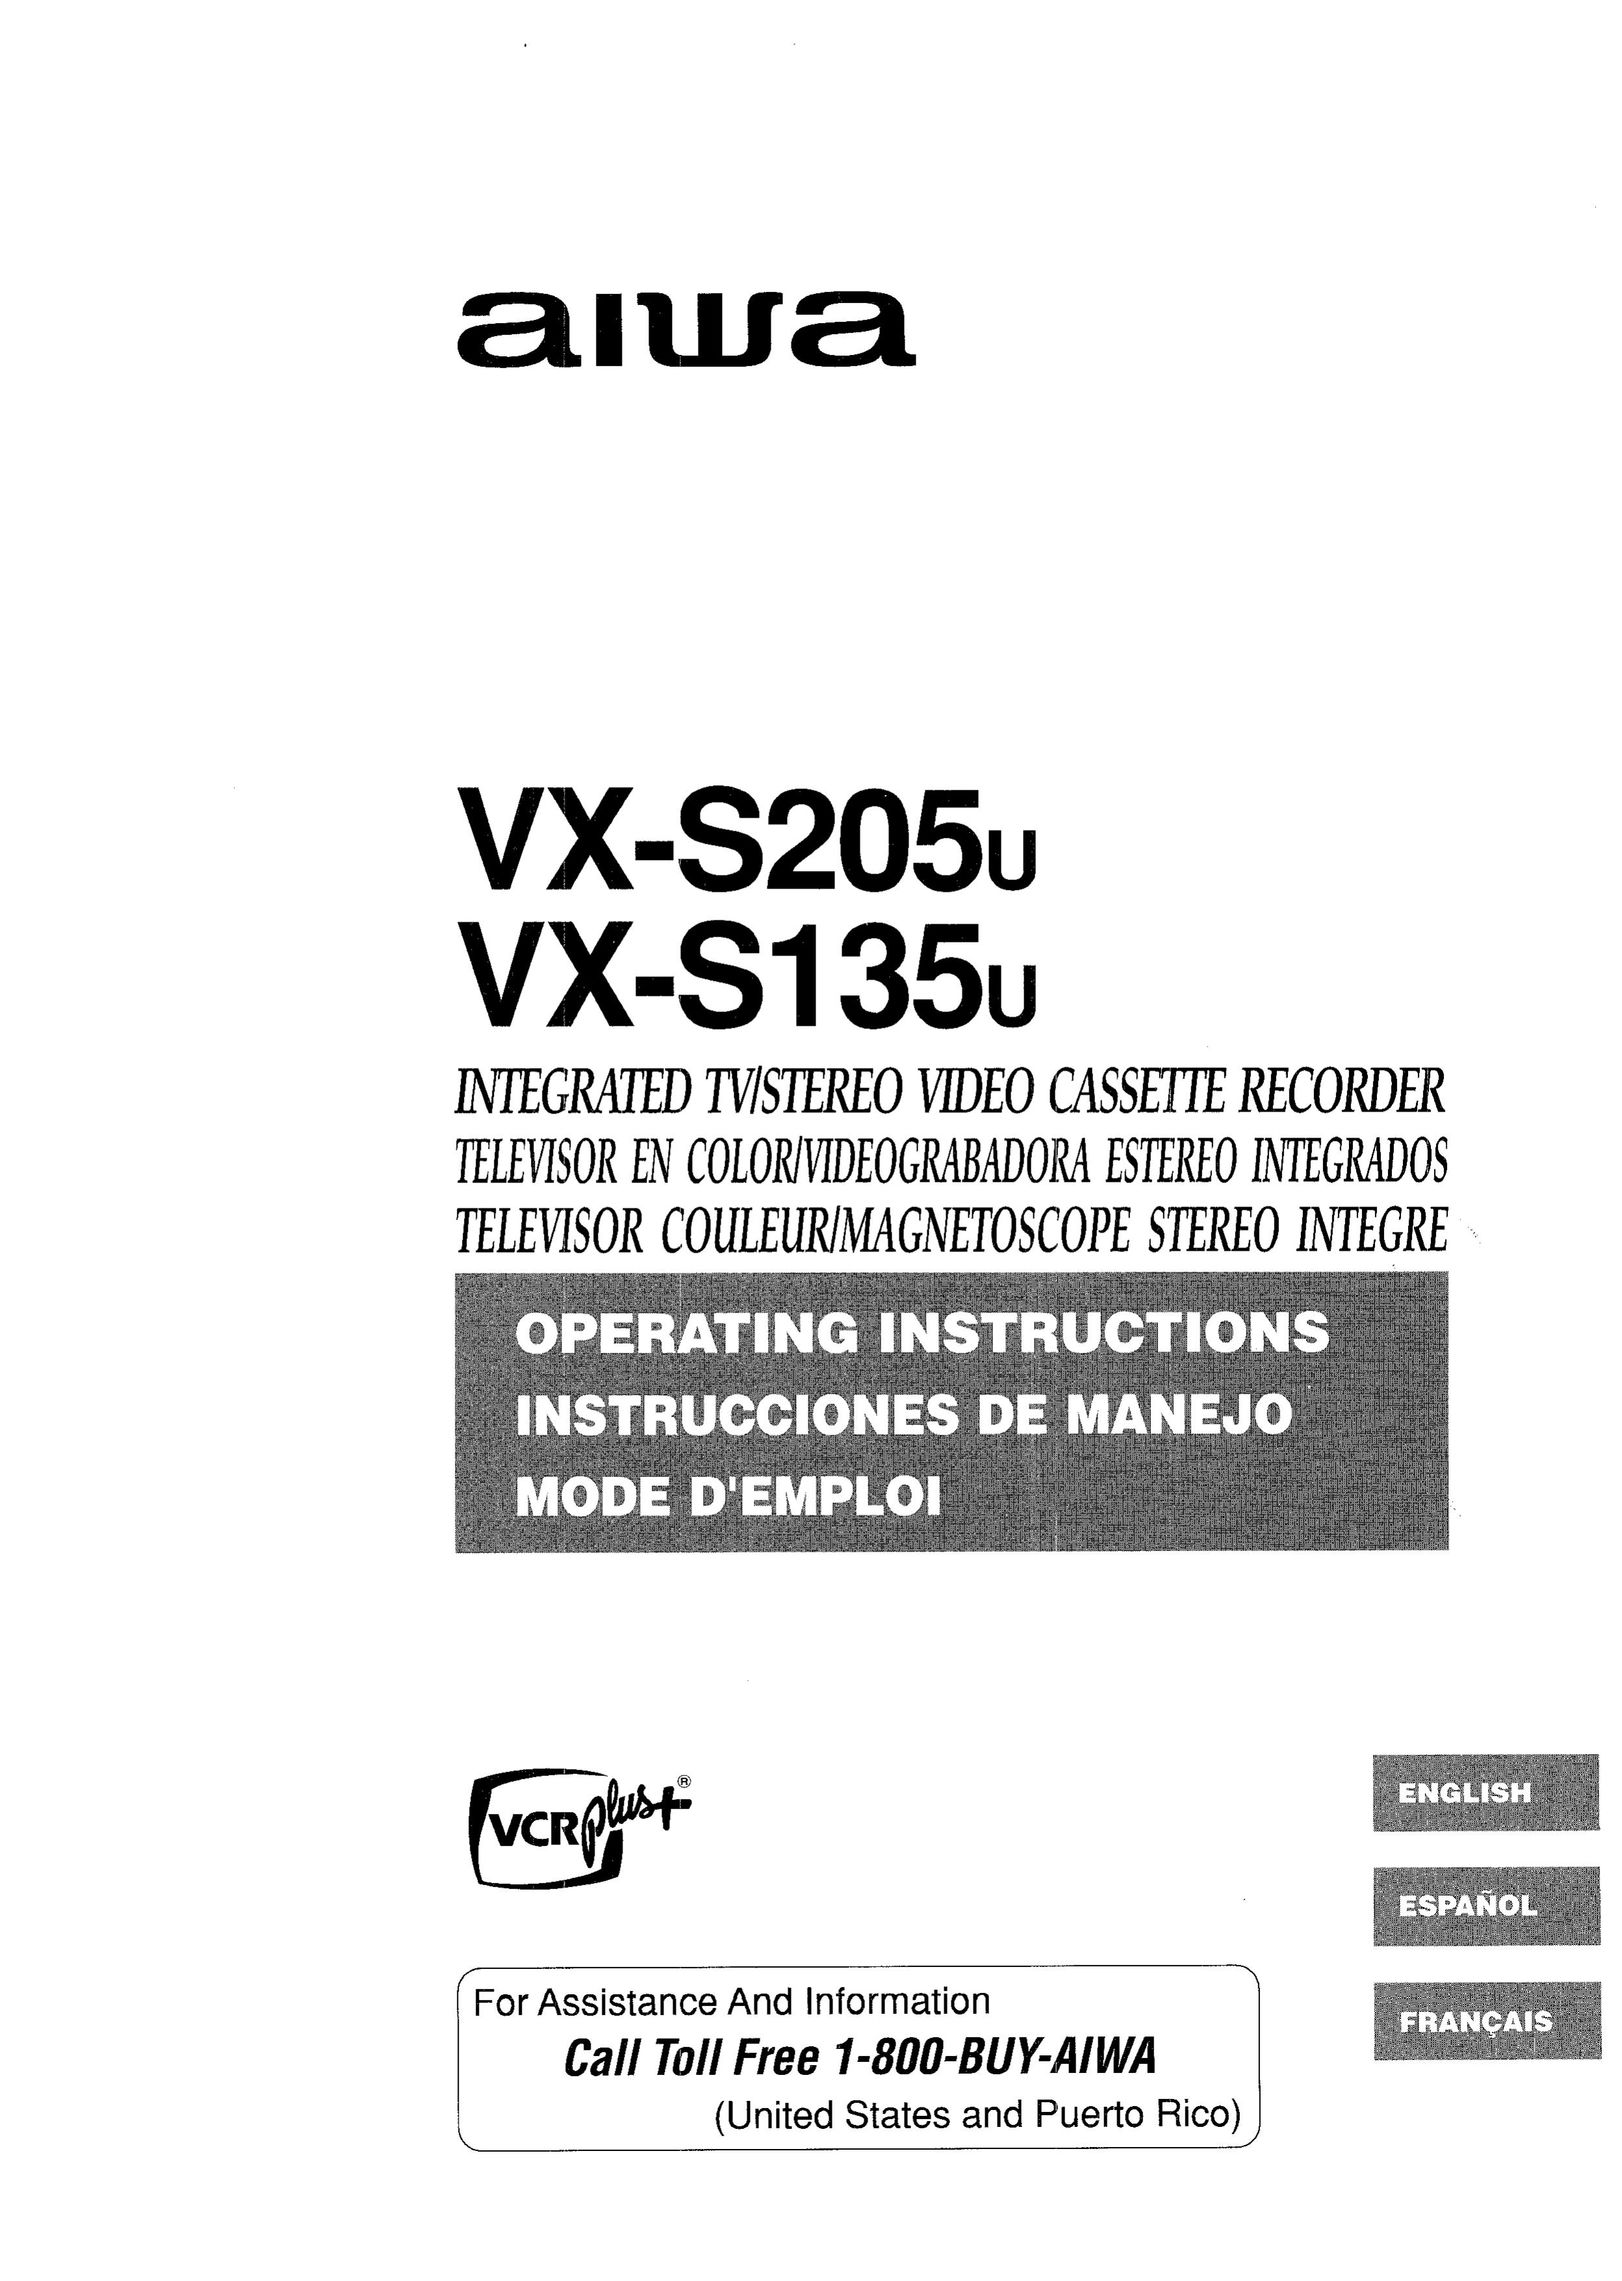 Aiwa VX-S135U Cassette Player User Manual (Page 1)